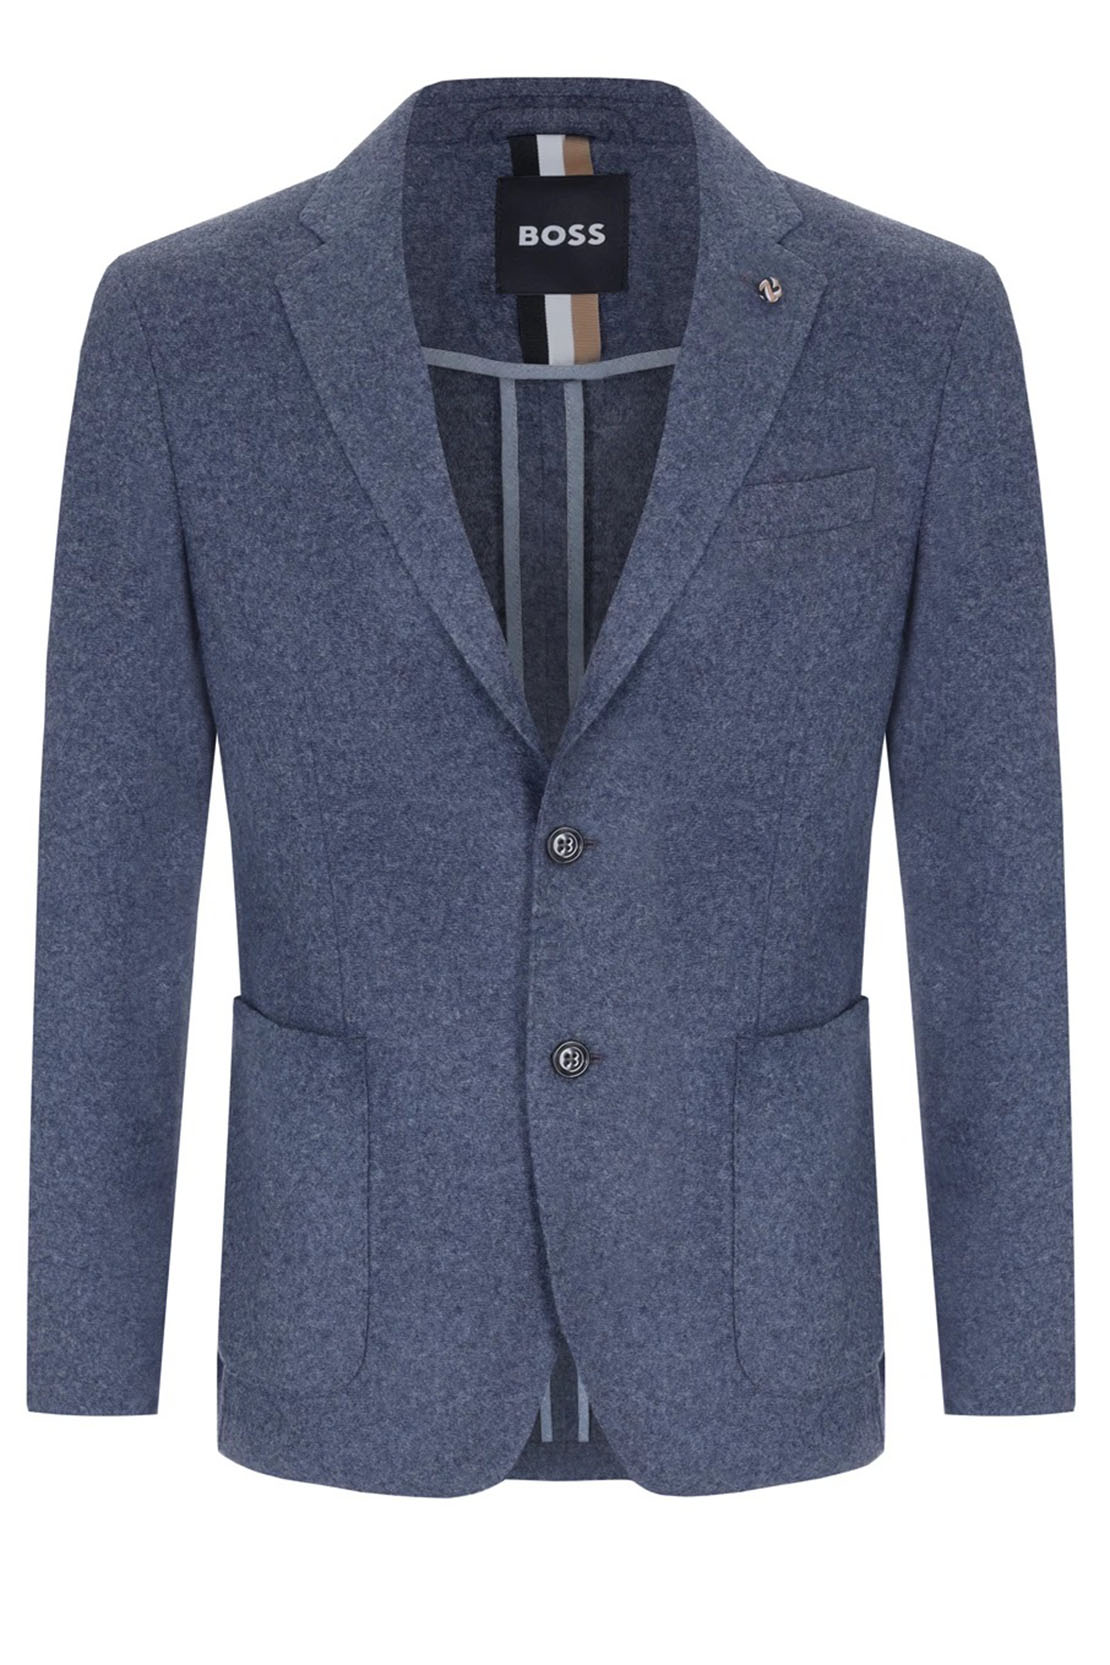 BOSS - Slim-Fit Jacket In Stretch Jersey With Wool In Open Blue 50502533 475